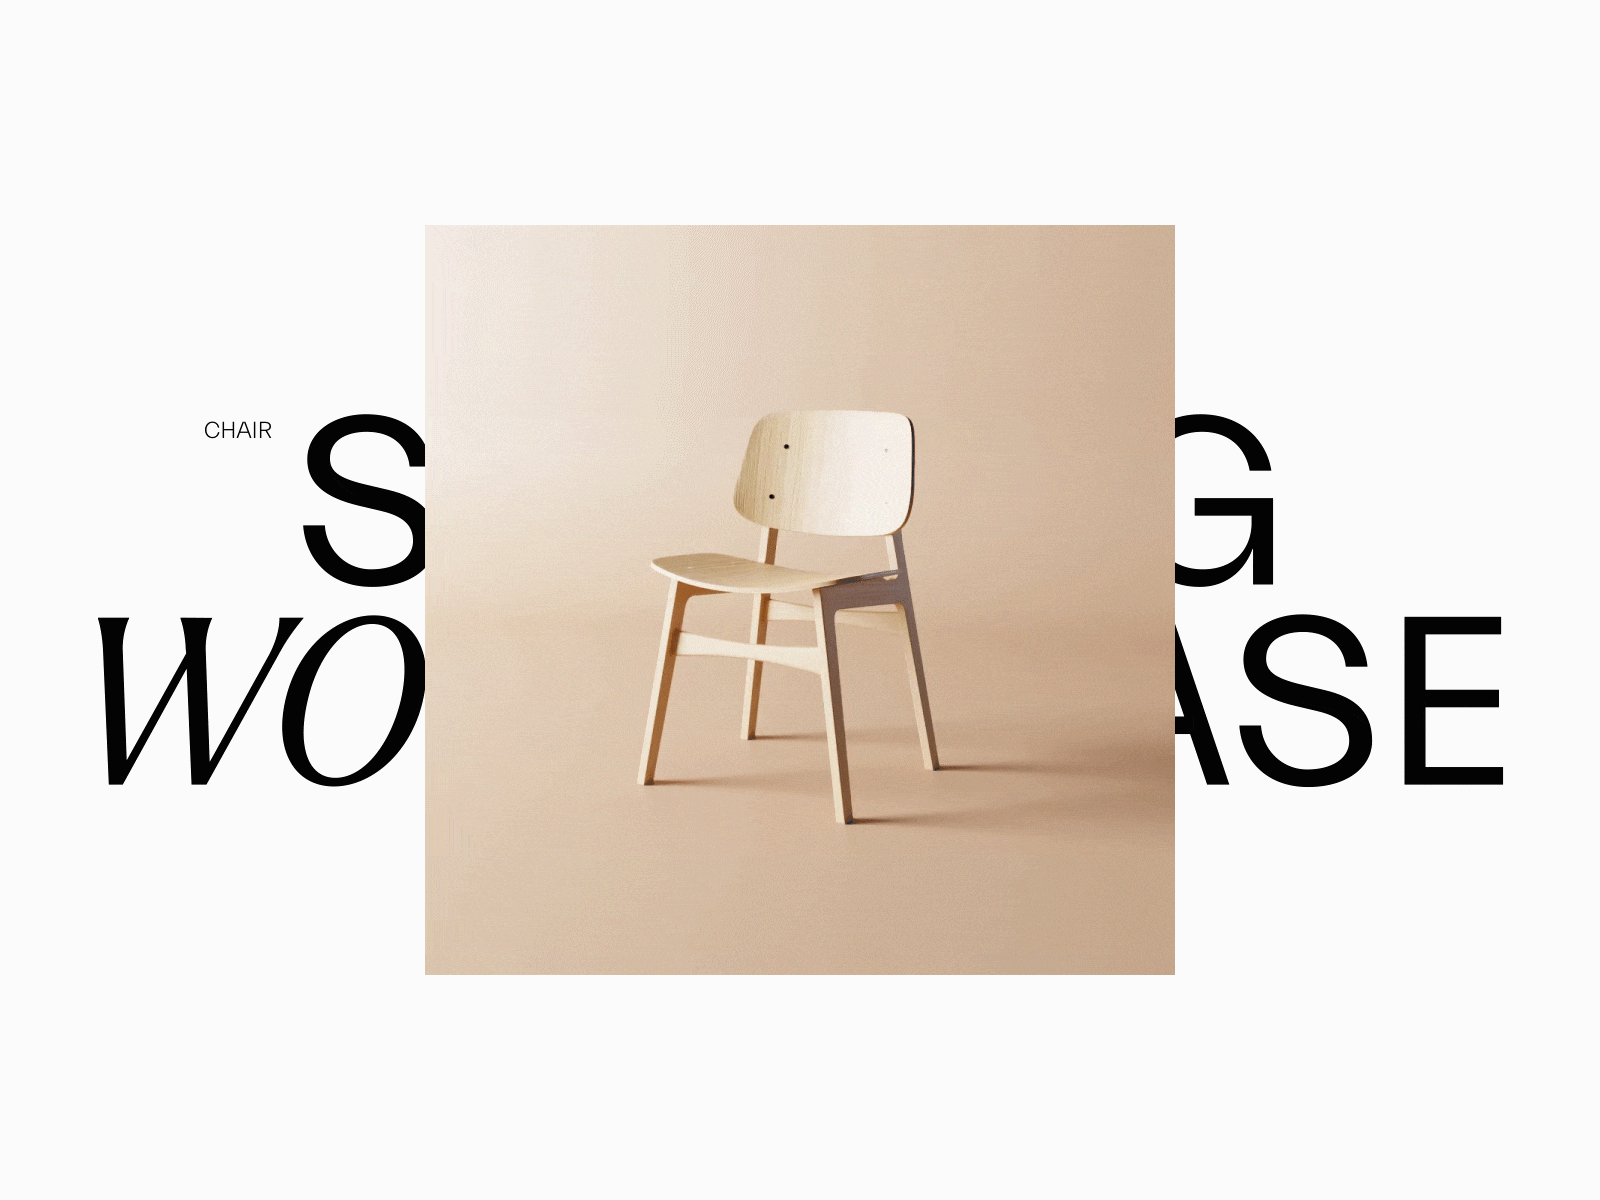 Chair Søborg wood base - Product Design